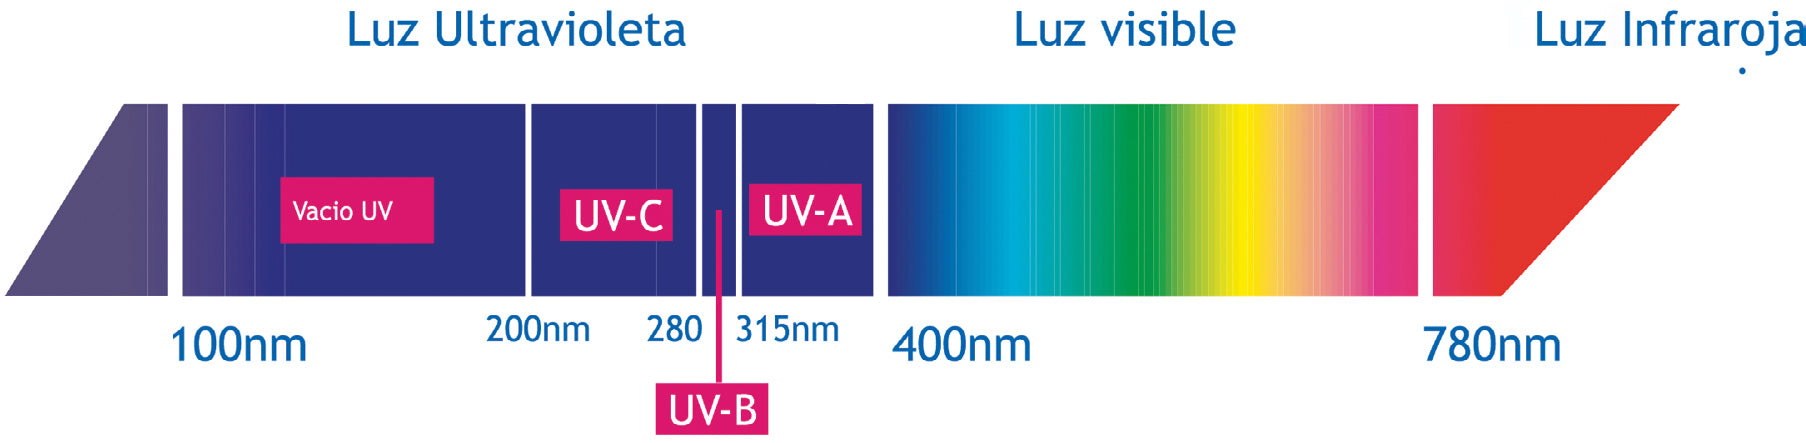 medidor ultravioleta uv-c sisimtel